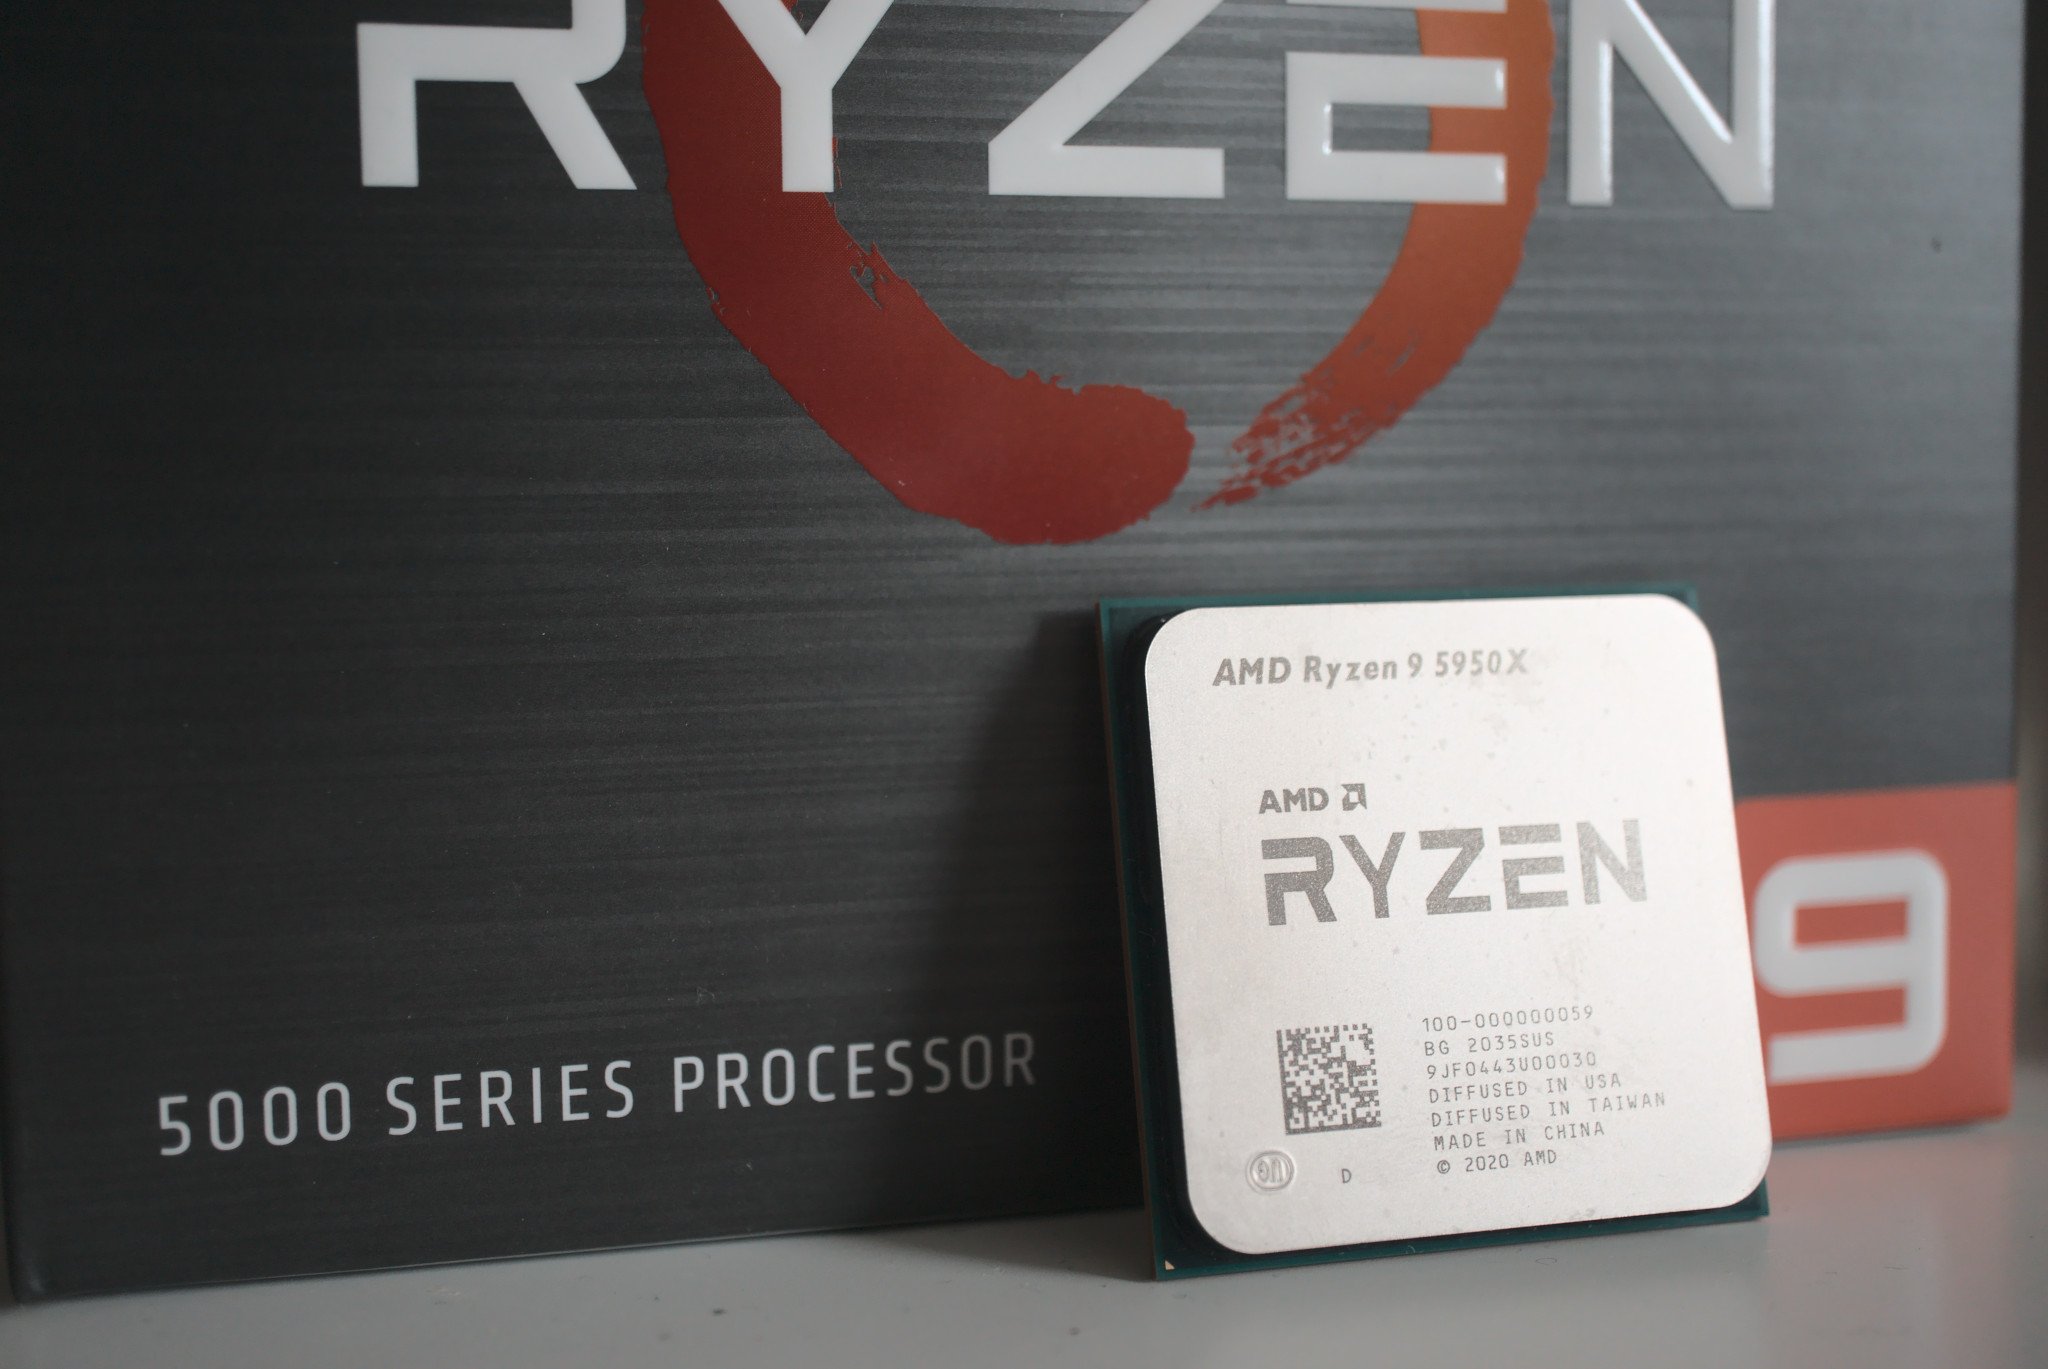 Amd 9 5950x купить. Ryzen 9 5950x. Ryzen 7 5950x. Процессор AMD Ryzen 9 5950x OEM. Ryzen 5950x коробка.